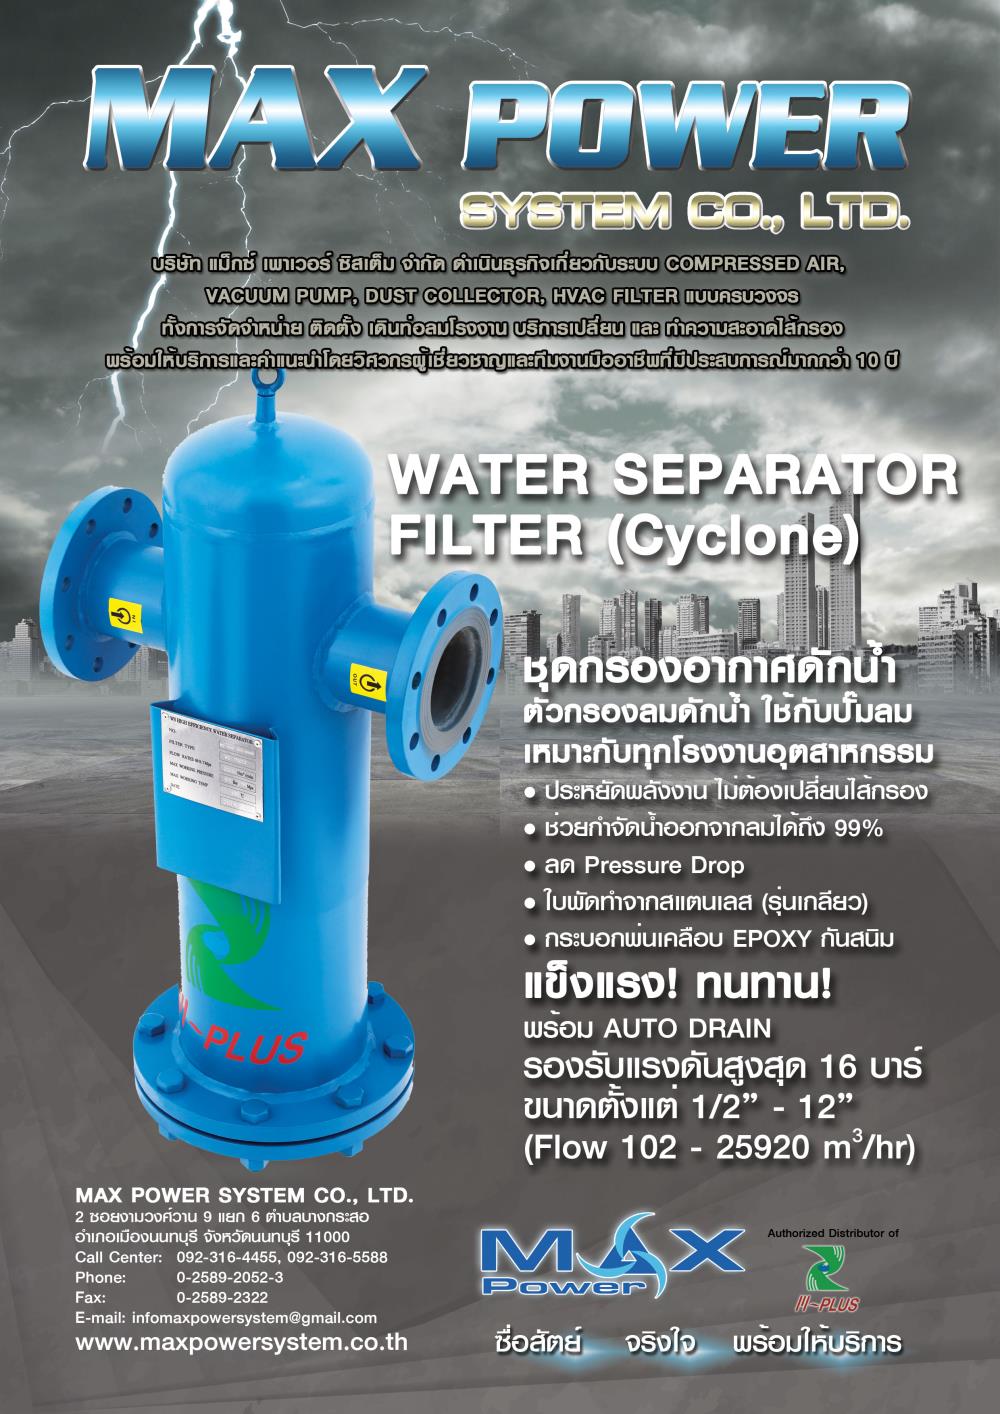 Water Separator Filter (Cyclone Filter) / ชุดกรองดักน้ำจากลมอัด ขนาดตั้งแต่ 102 ถึง 25,920 คิว/ชม.,Water separator, Filter, Main line filter, ดักน้ำออกจากลม, กรองดักน้ำ, กรองน้ำ, ลมอัด, ฟิลเตอร์กรองลม, ชุดกรองลม,M-PLUS,Machinery and Process Equipment/Filters/Filtering Systems